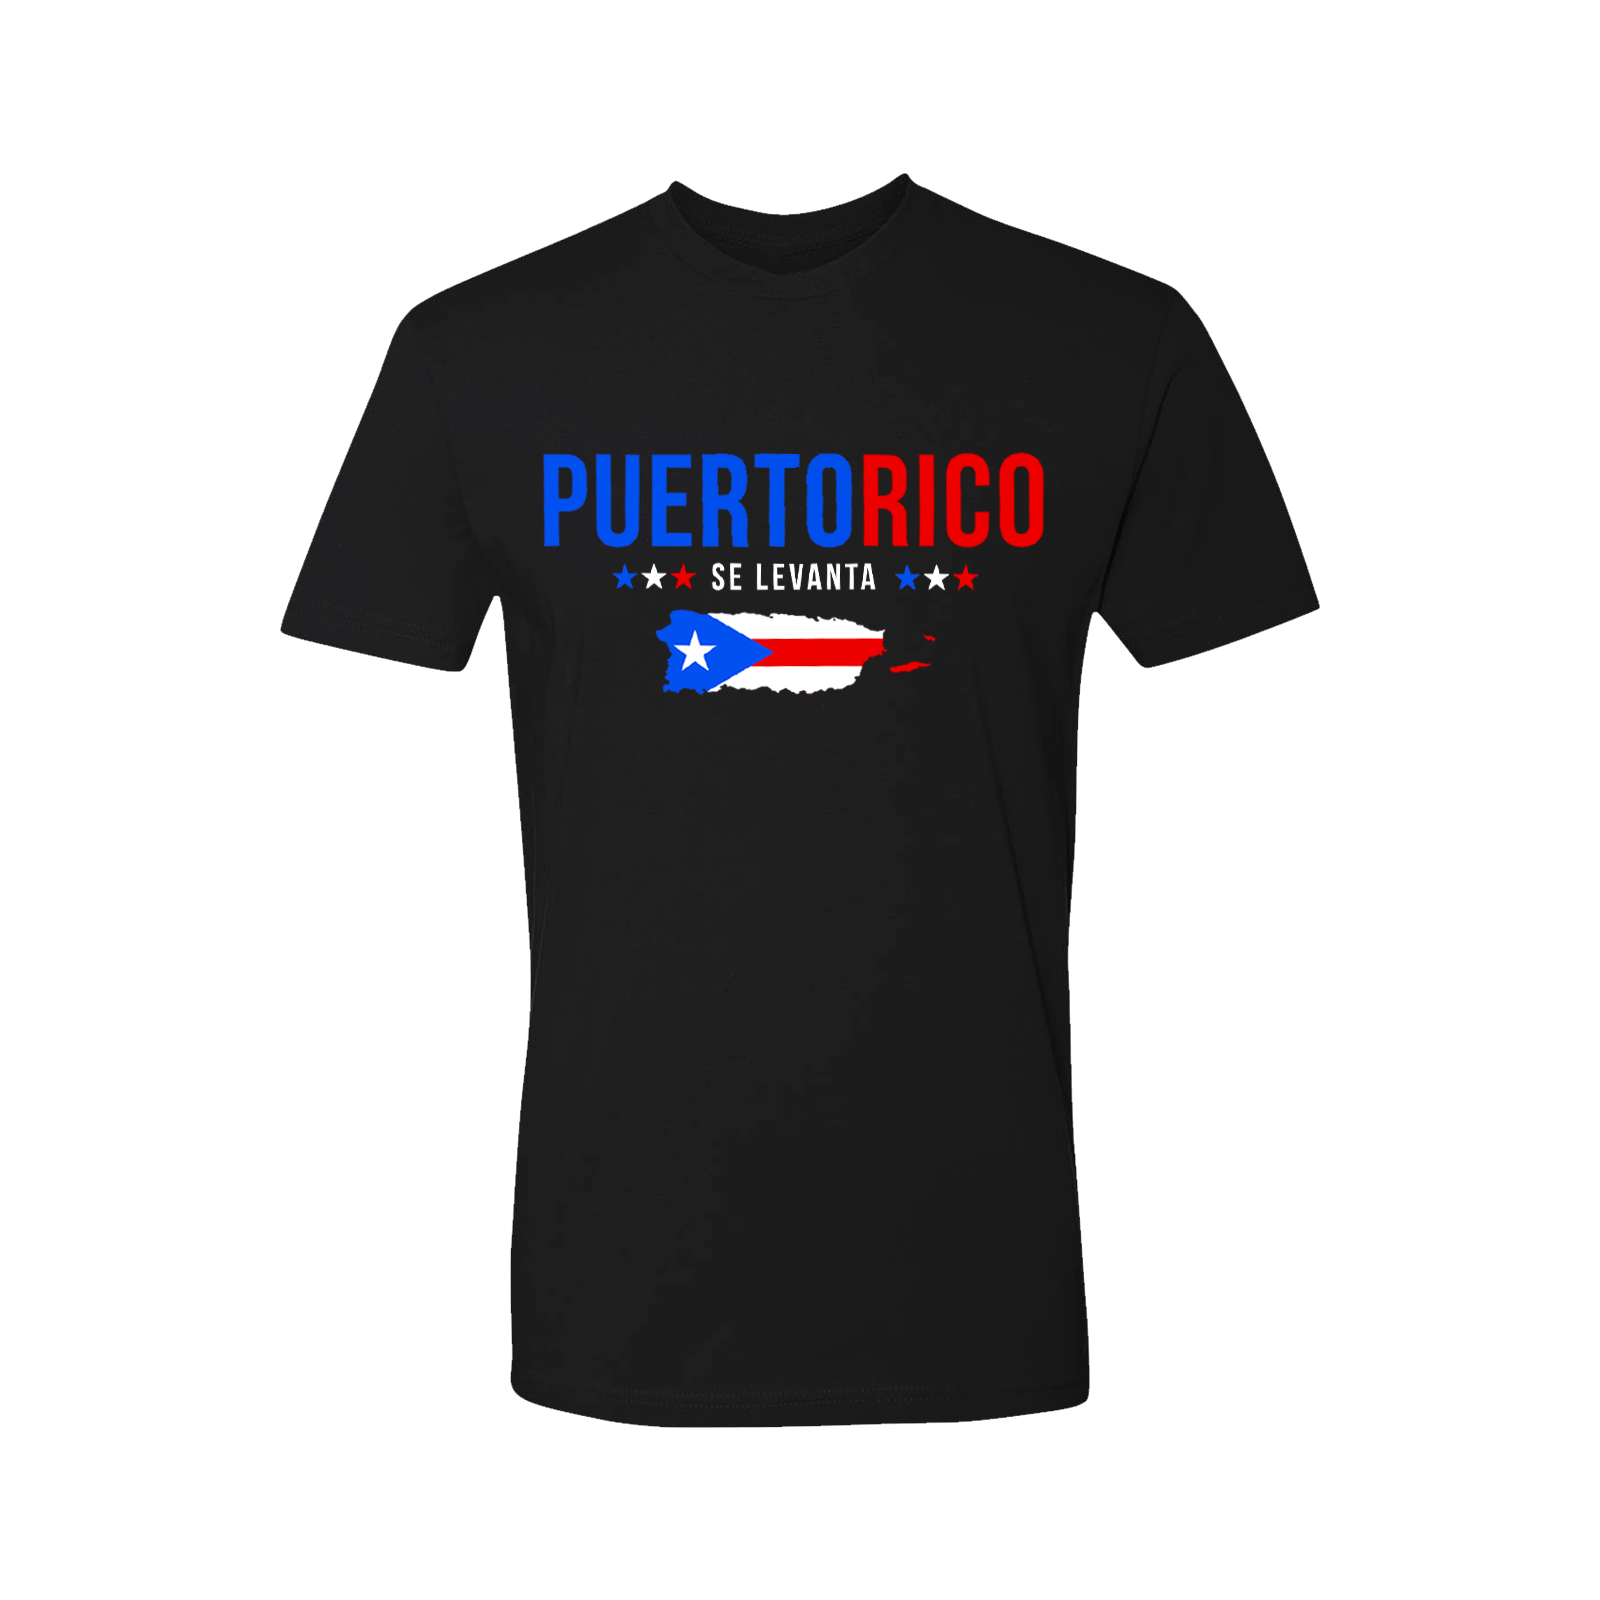 Puerto Rico Short Sleeve Shirt - Adult